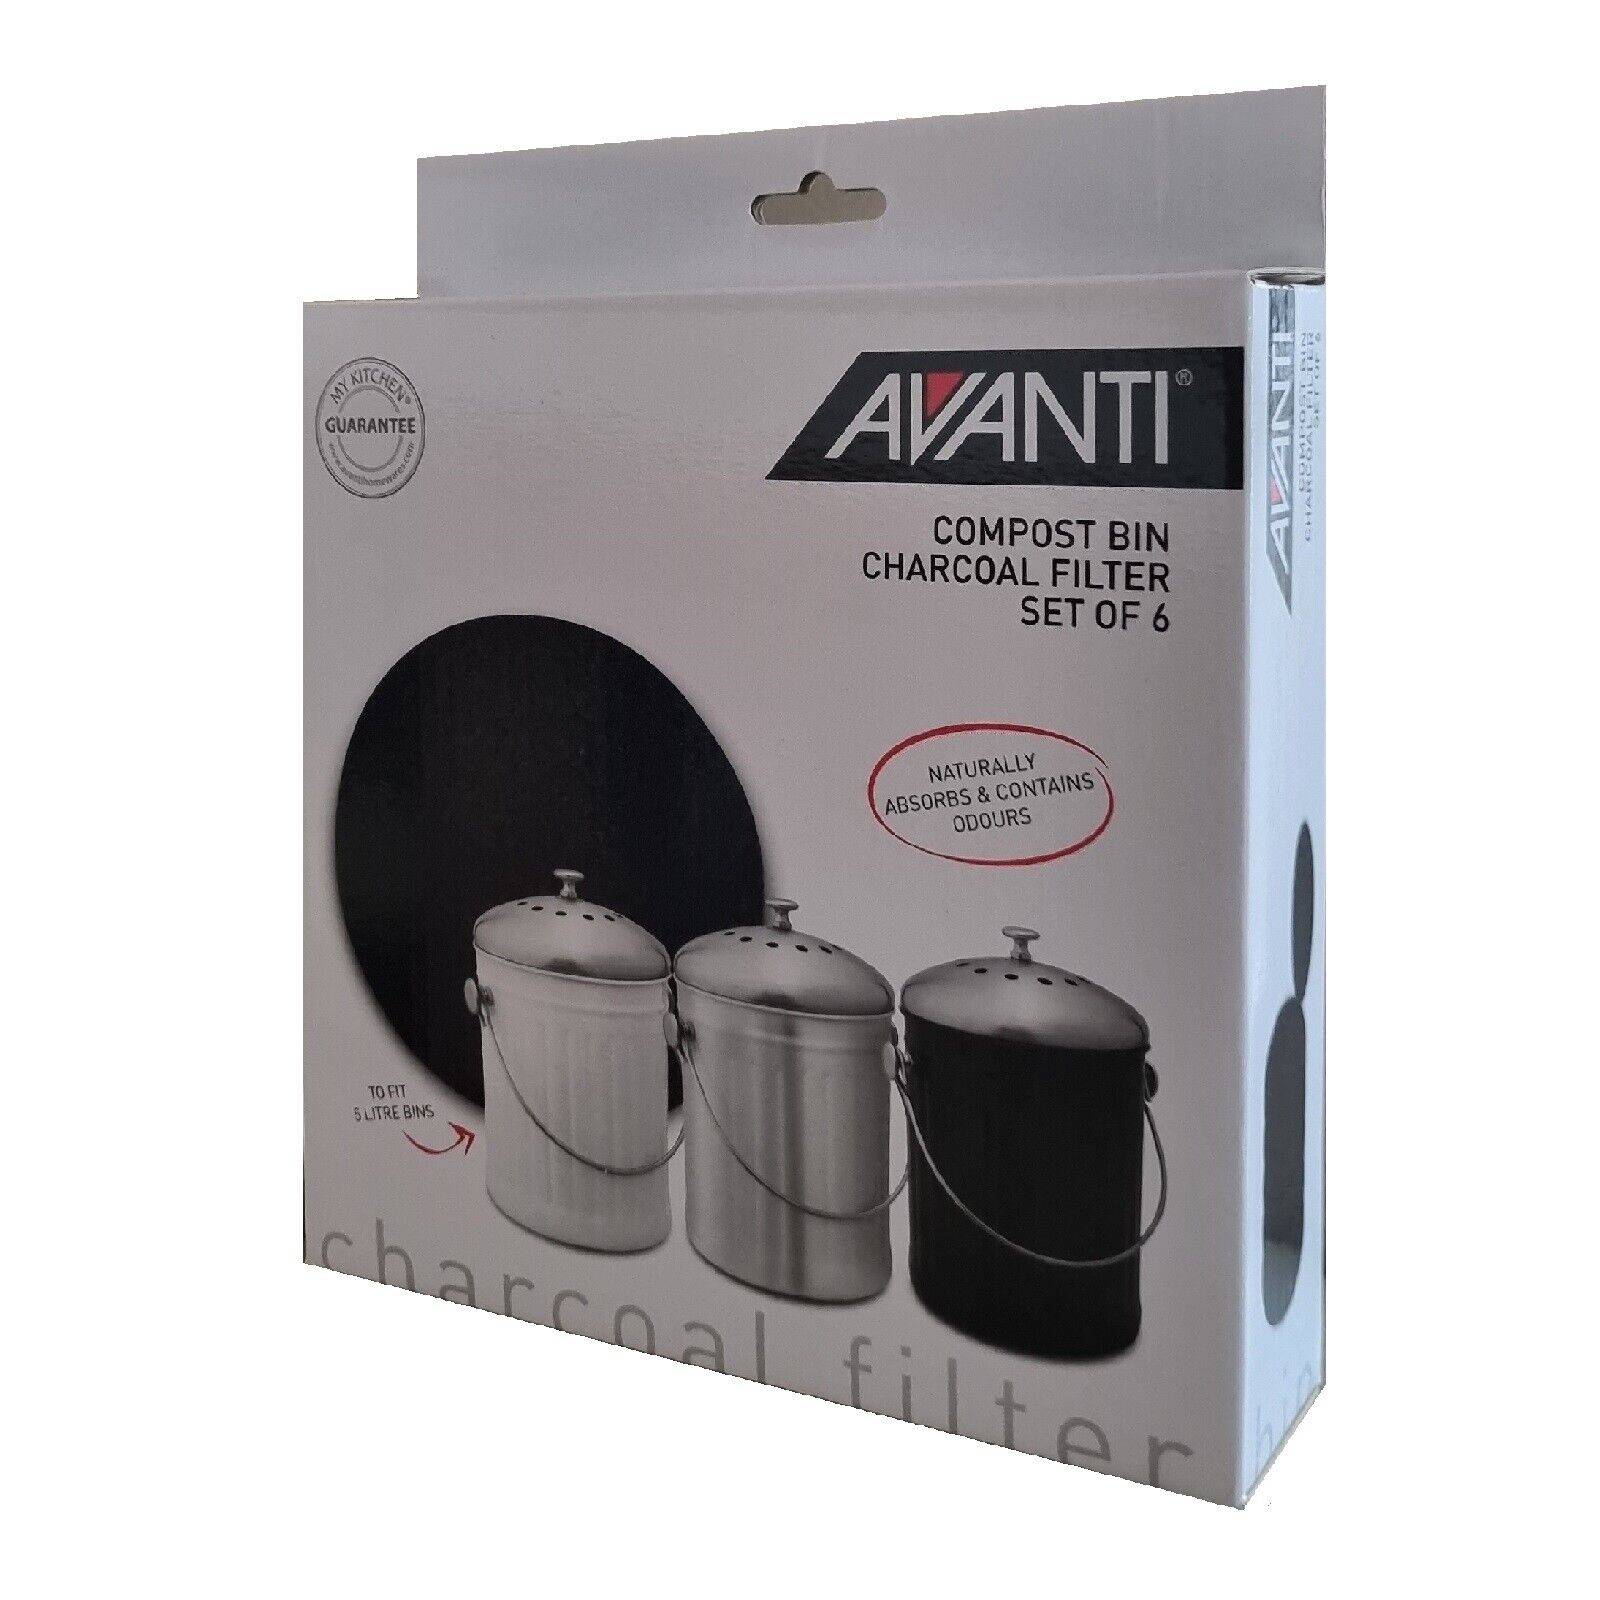 Avanti Compost Bin Filter 5.0 Litre Set of 6